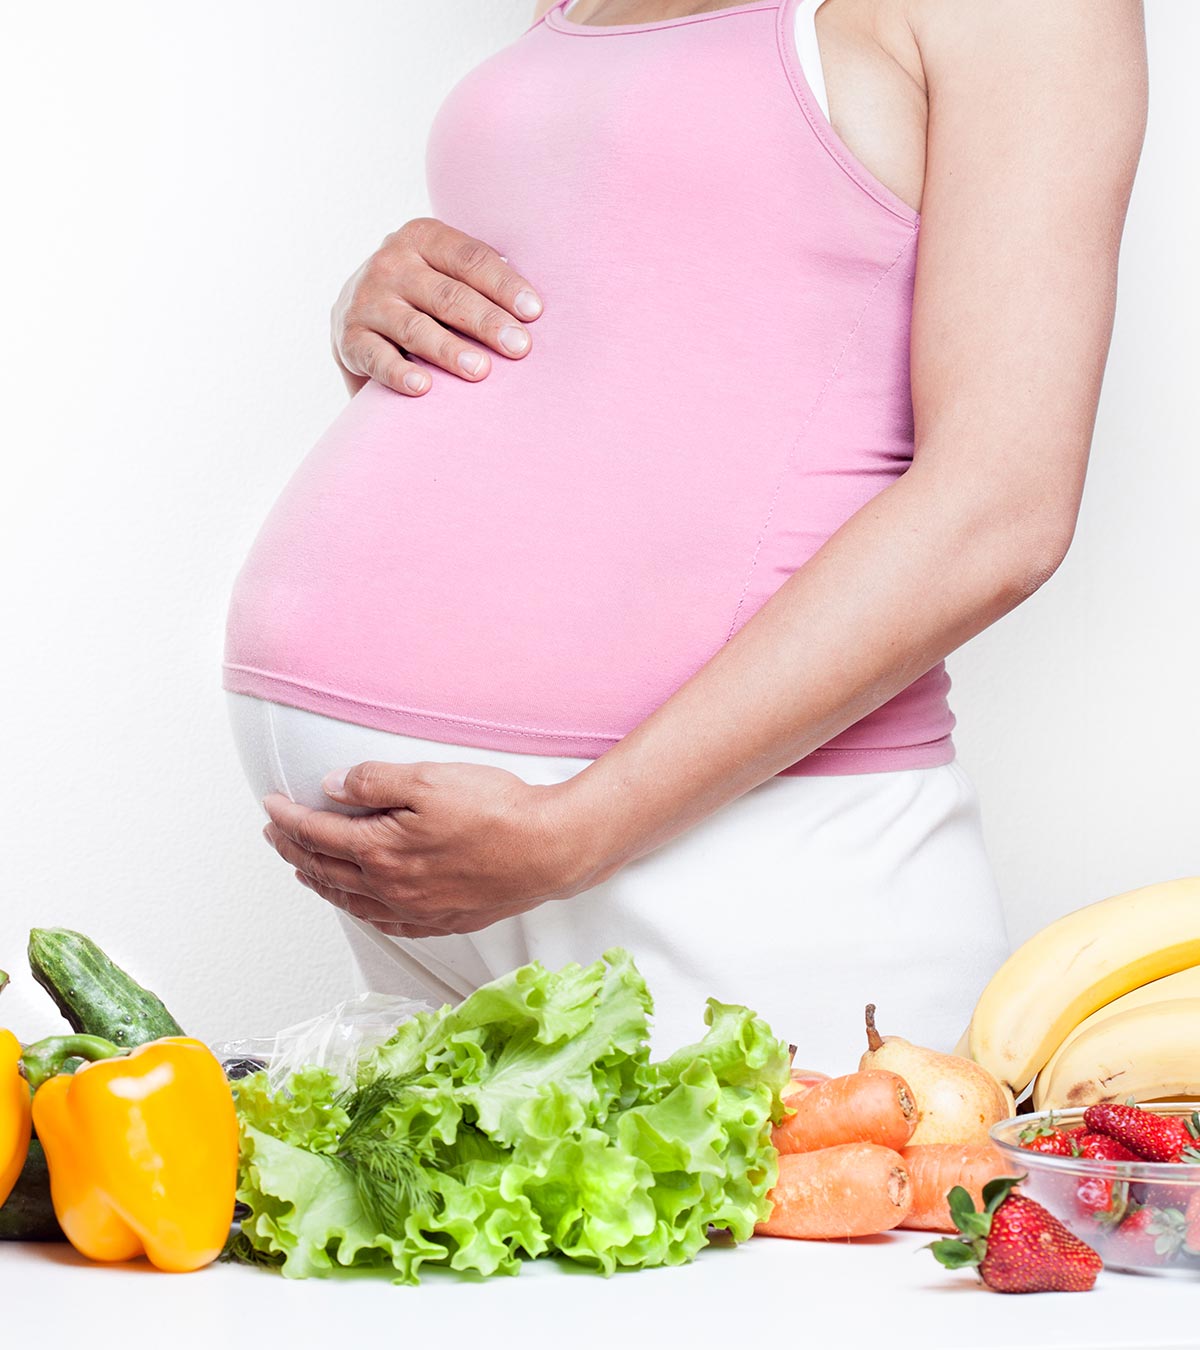 Detox During Pregnancy: Types, Risks And Safety Concerns